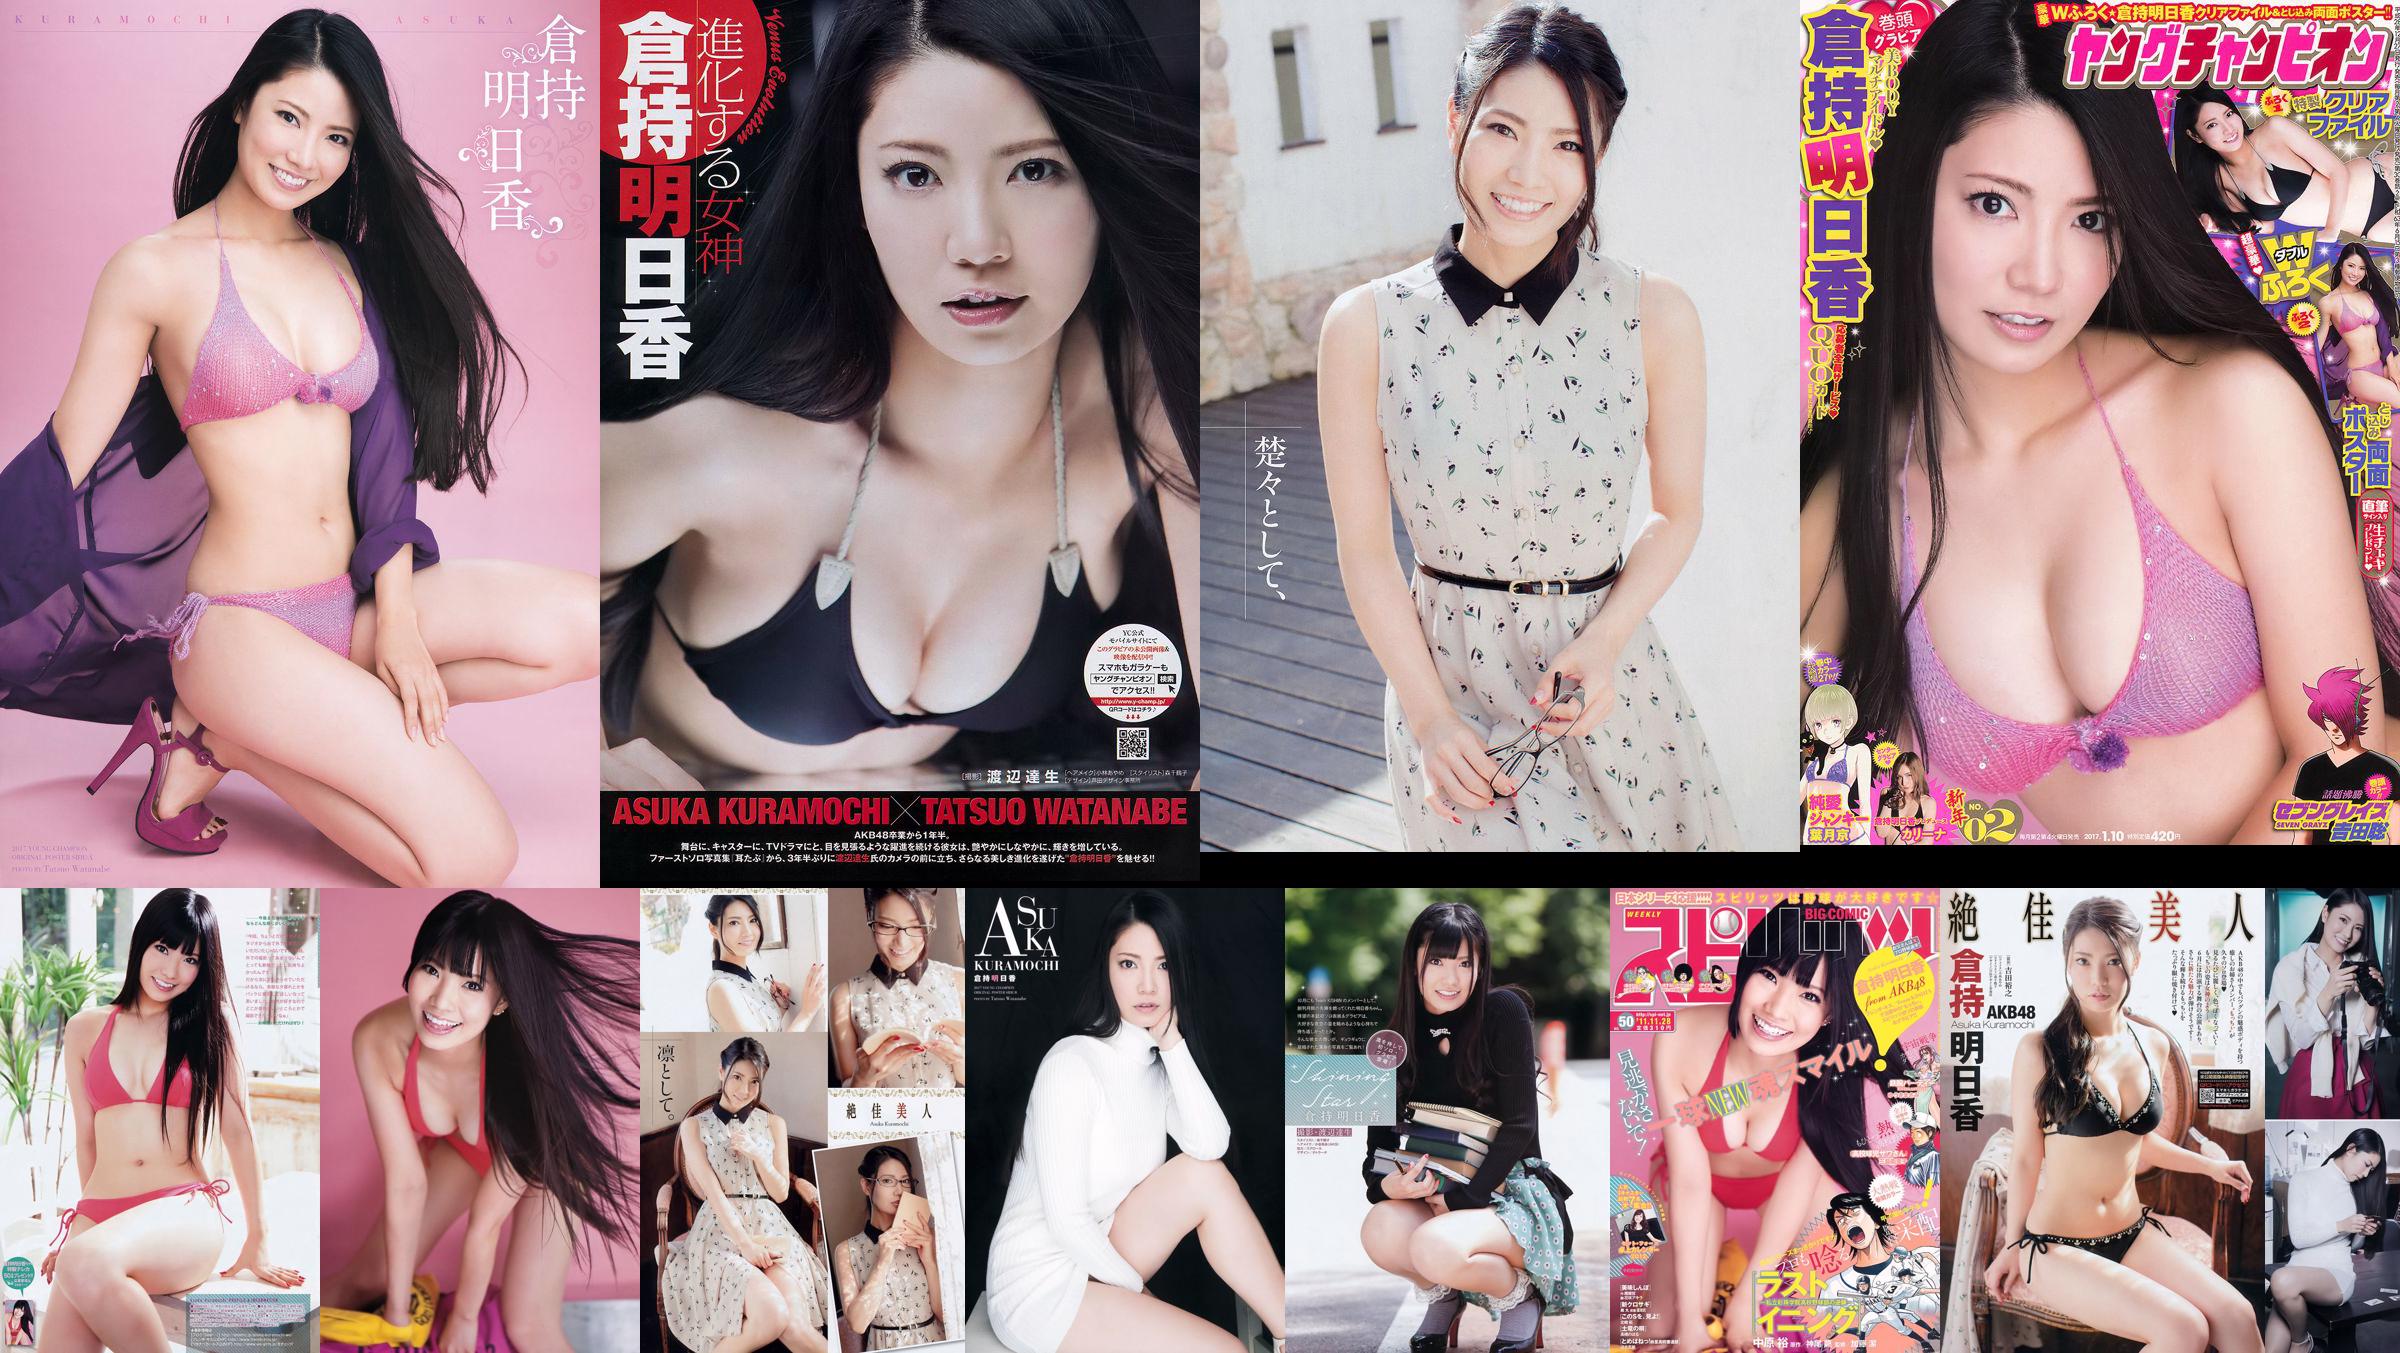 [Joven Campeona] Asuka Kuramochi 2015 No 09 Revista fotográfica No.601489 Página 4